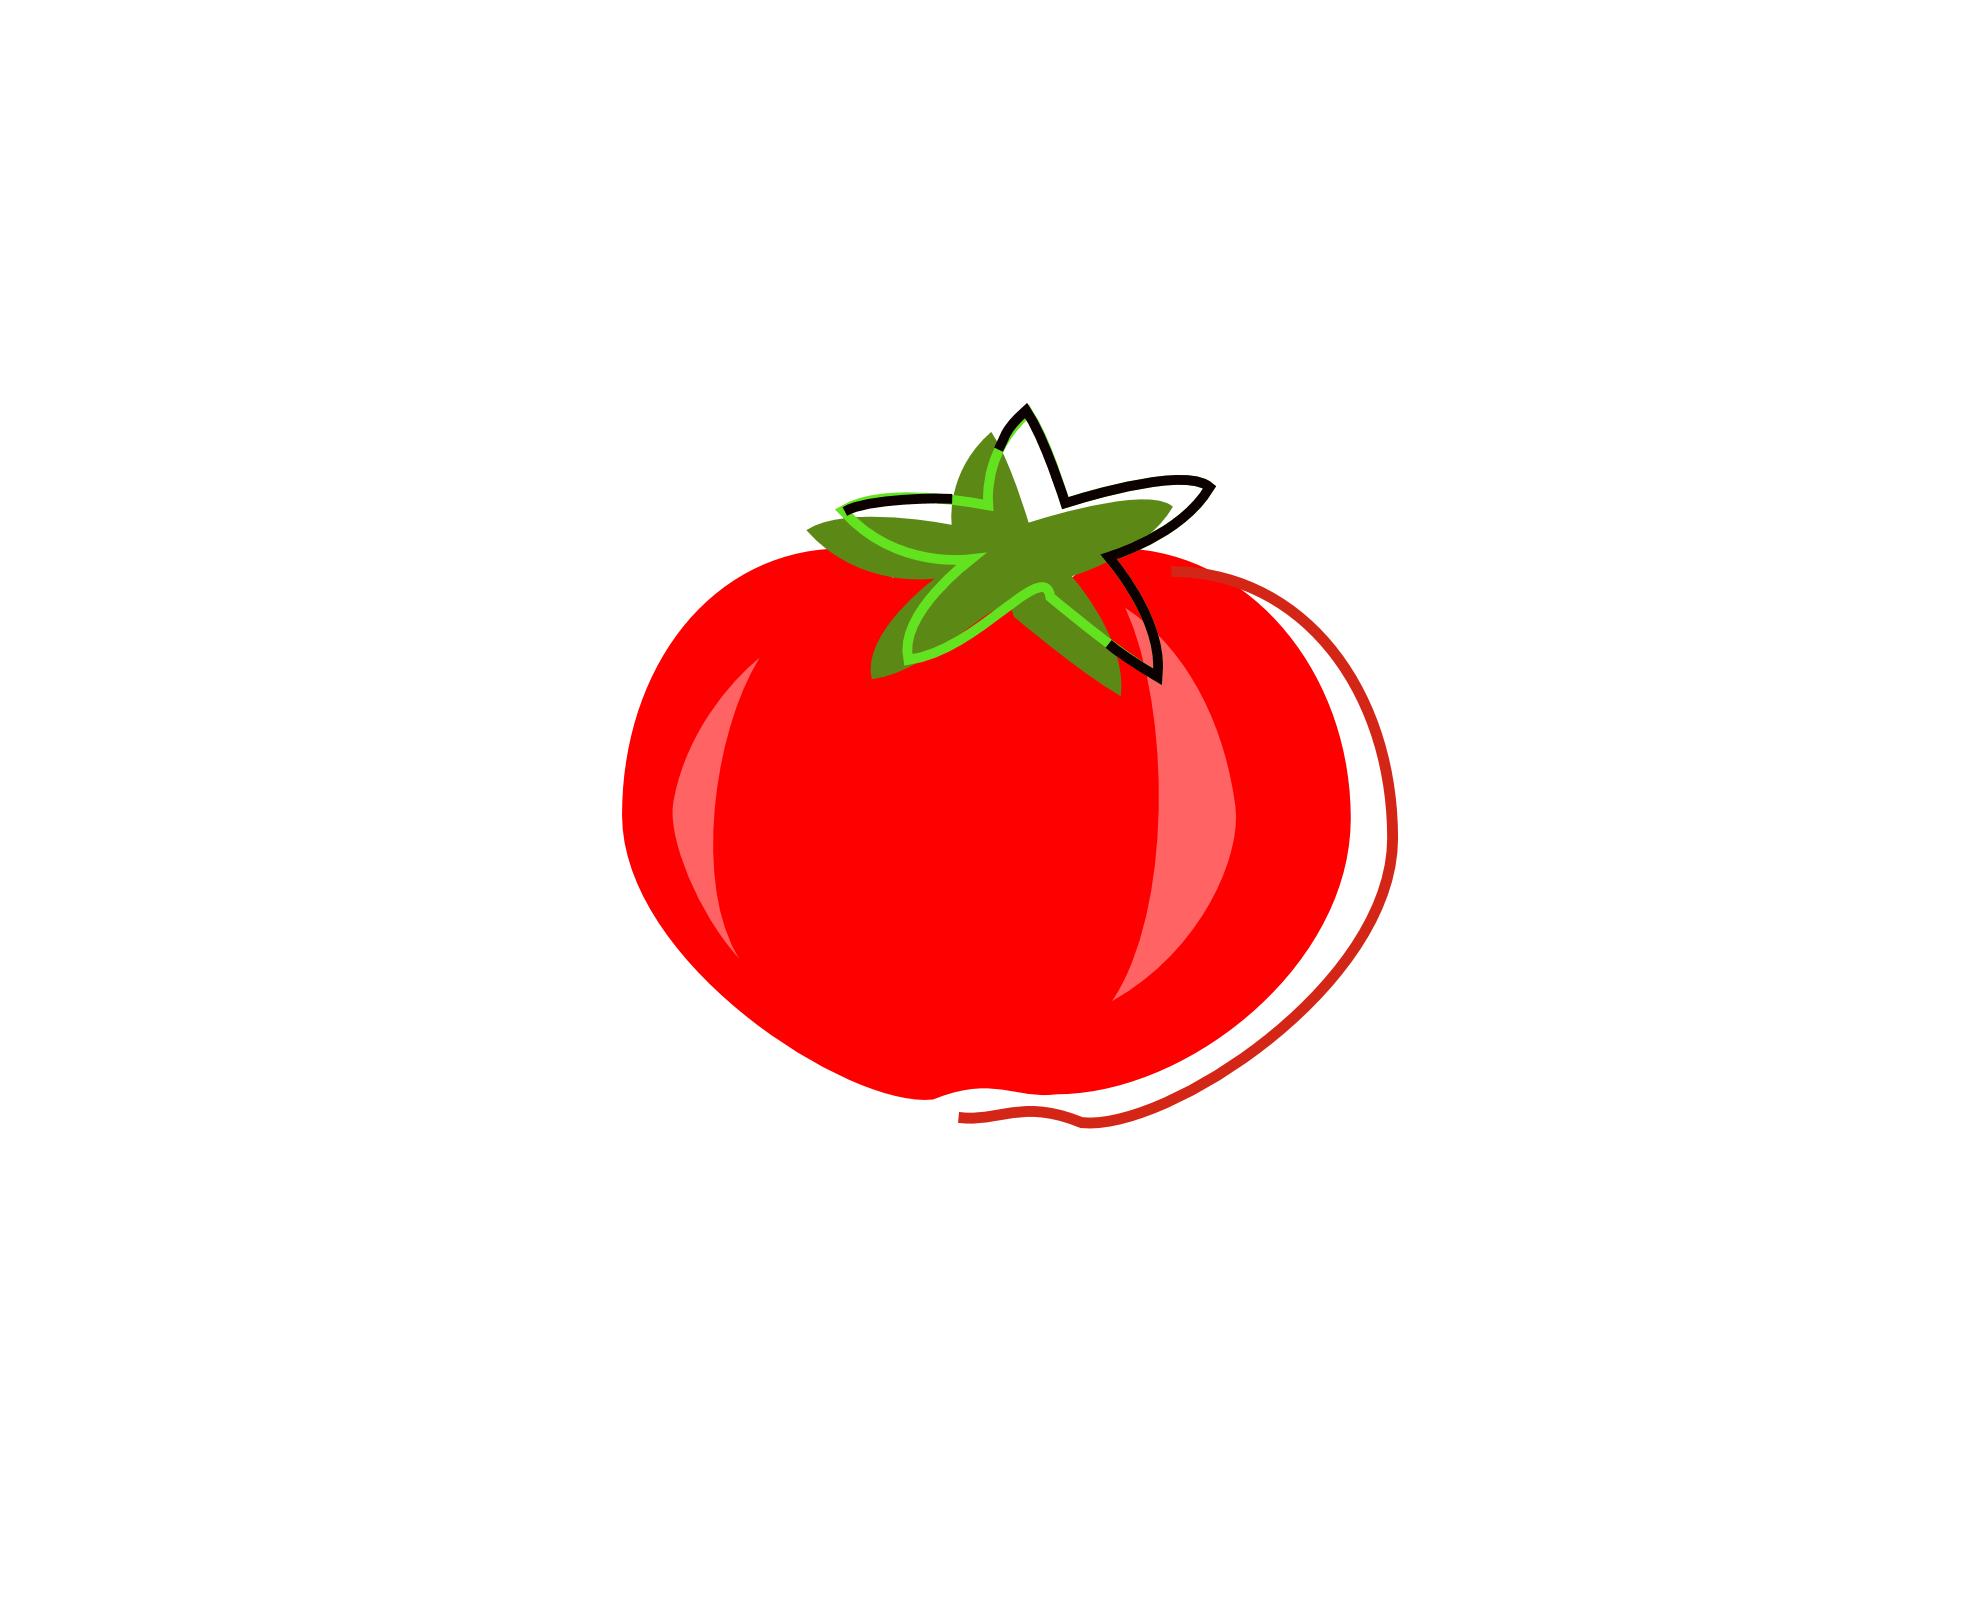 Tomatoes clipart vector. Tomato vegetable frames illustrations